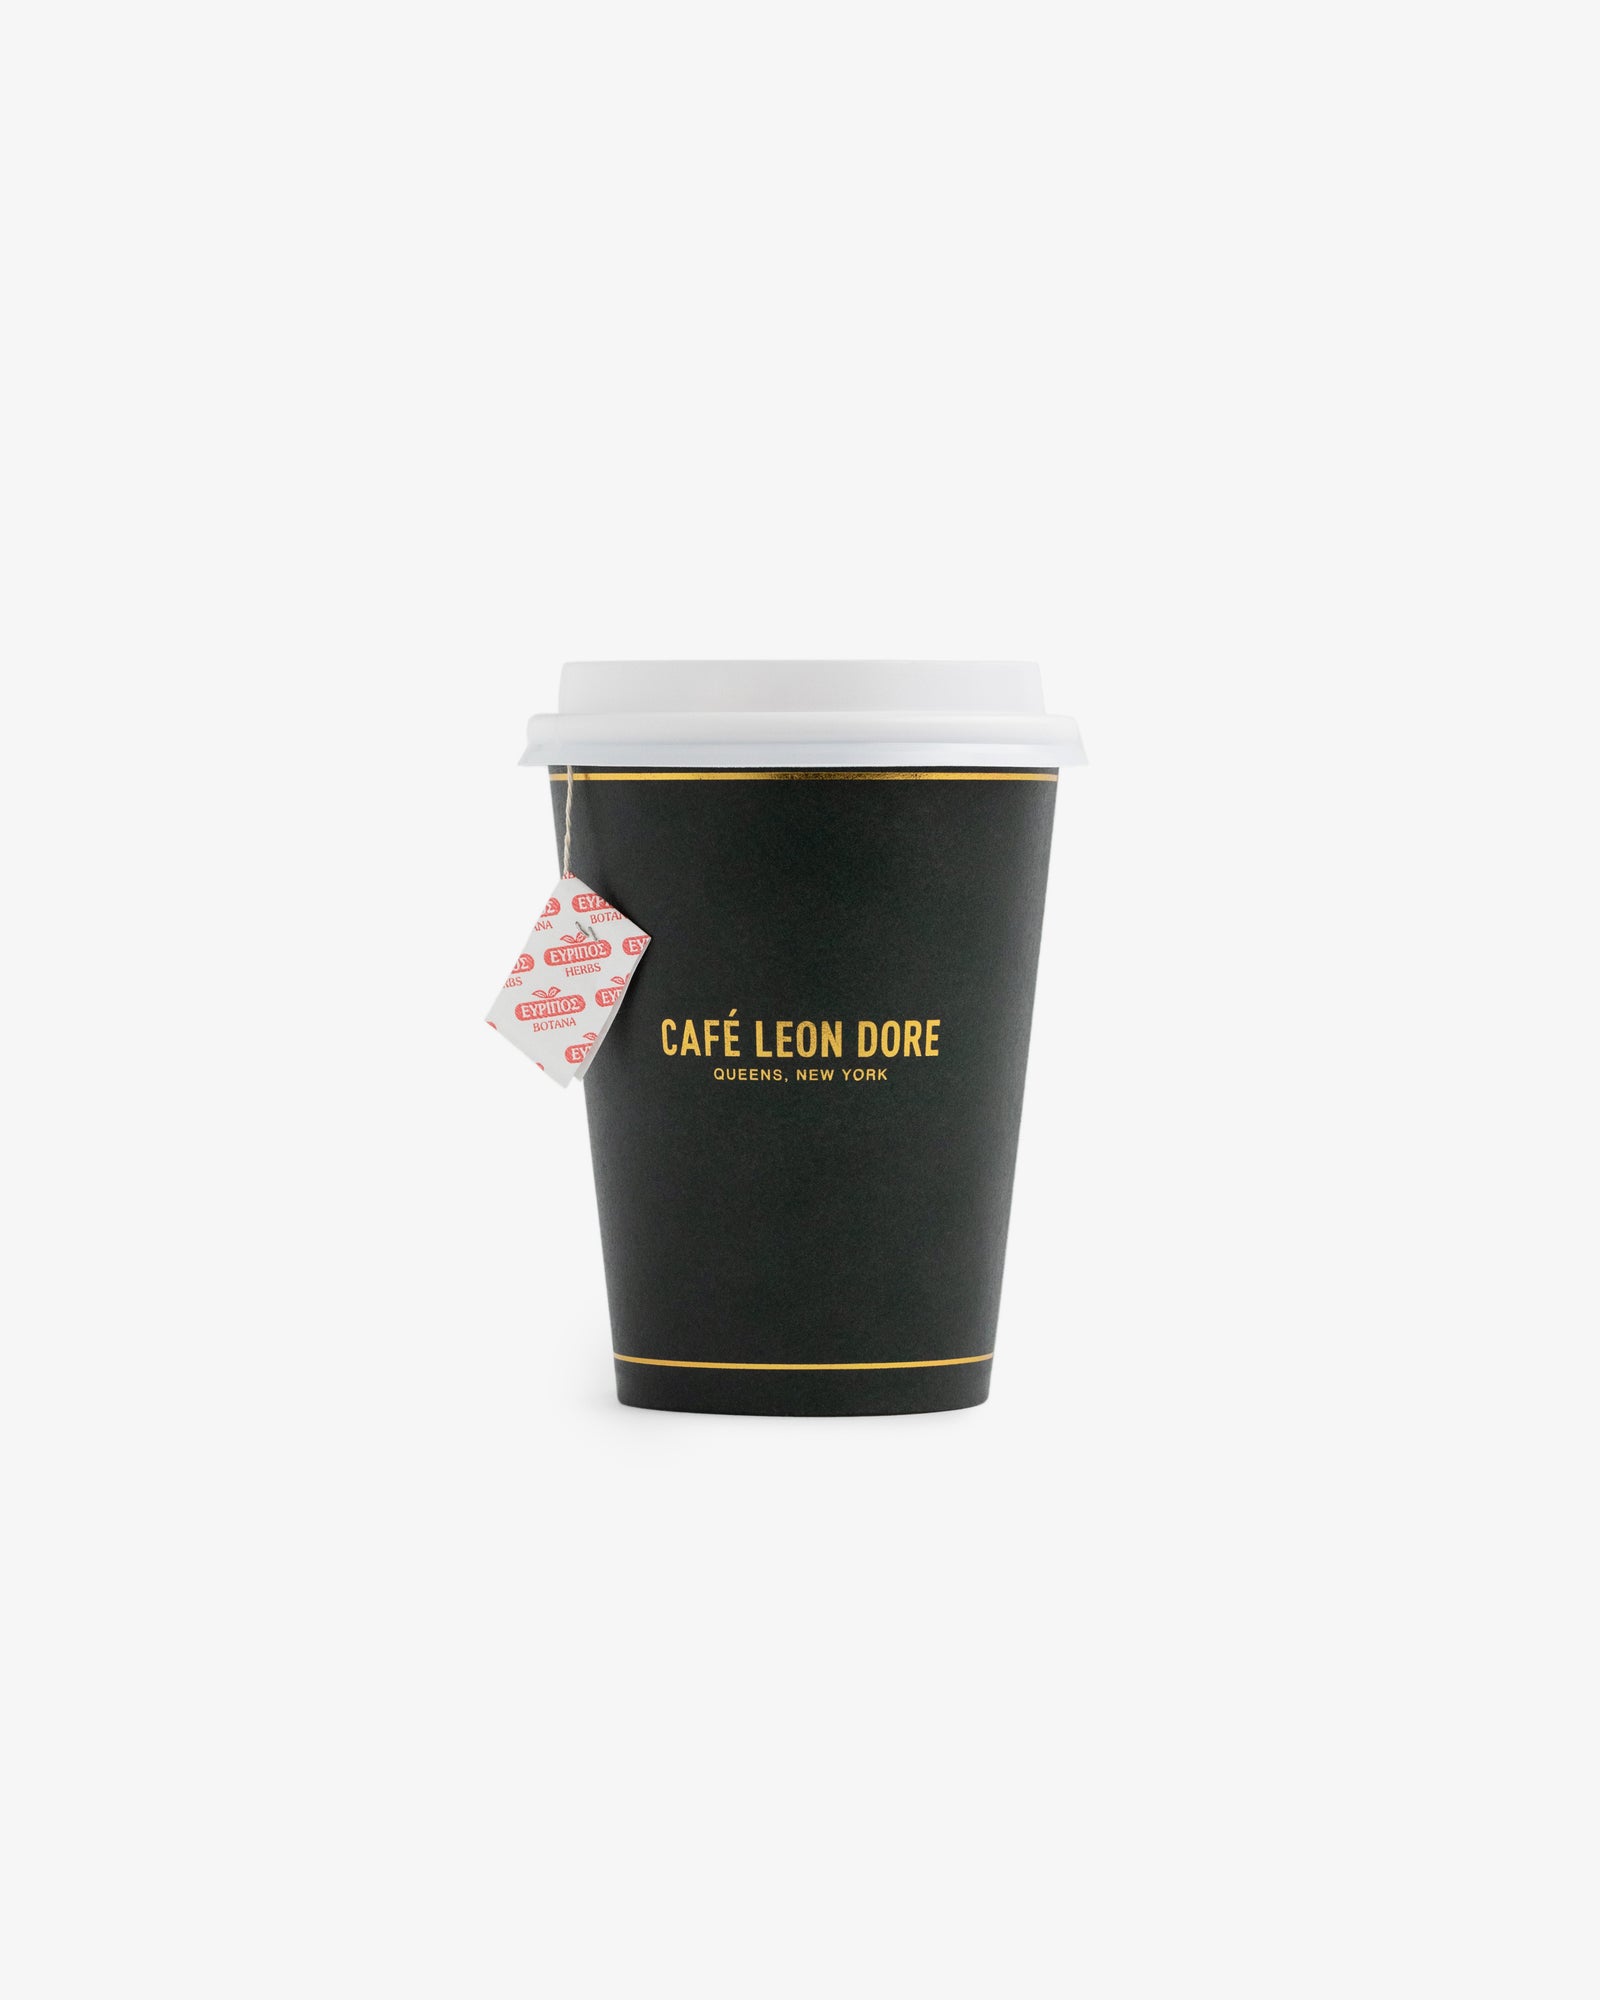 Ujae - Cafe Aimé Leon Dore 🤭🤭 Their Freddo Cappuccino will